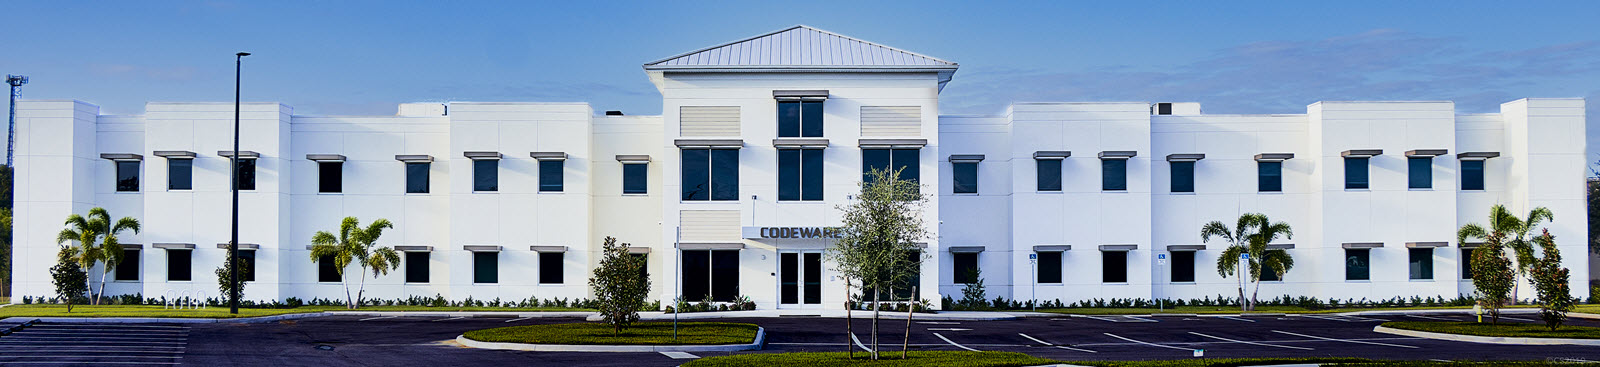 Codeware's New Corporate Headquarters in Sarasota, FL USA